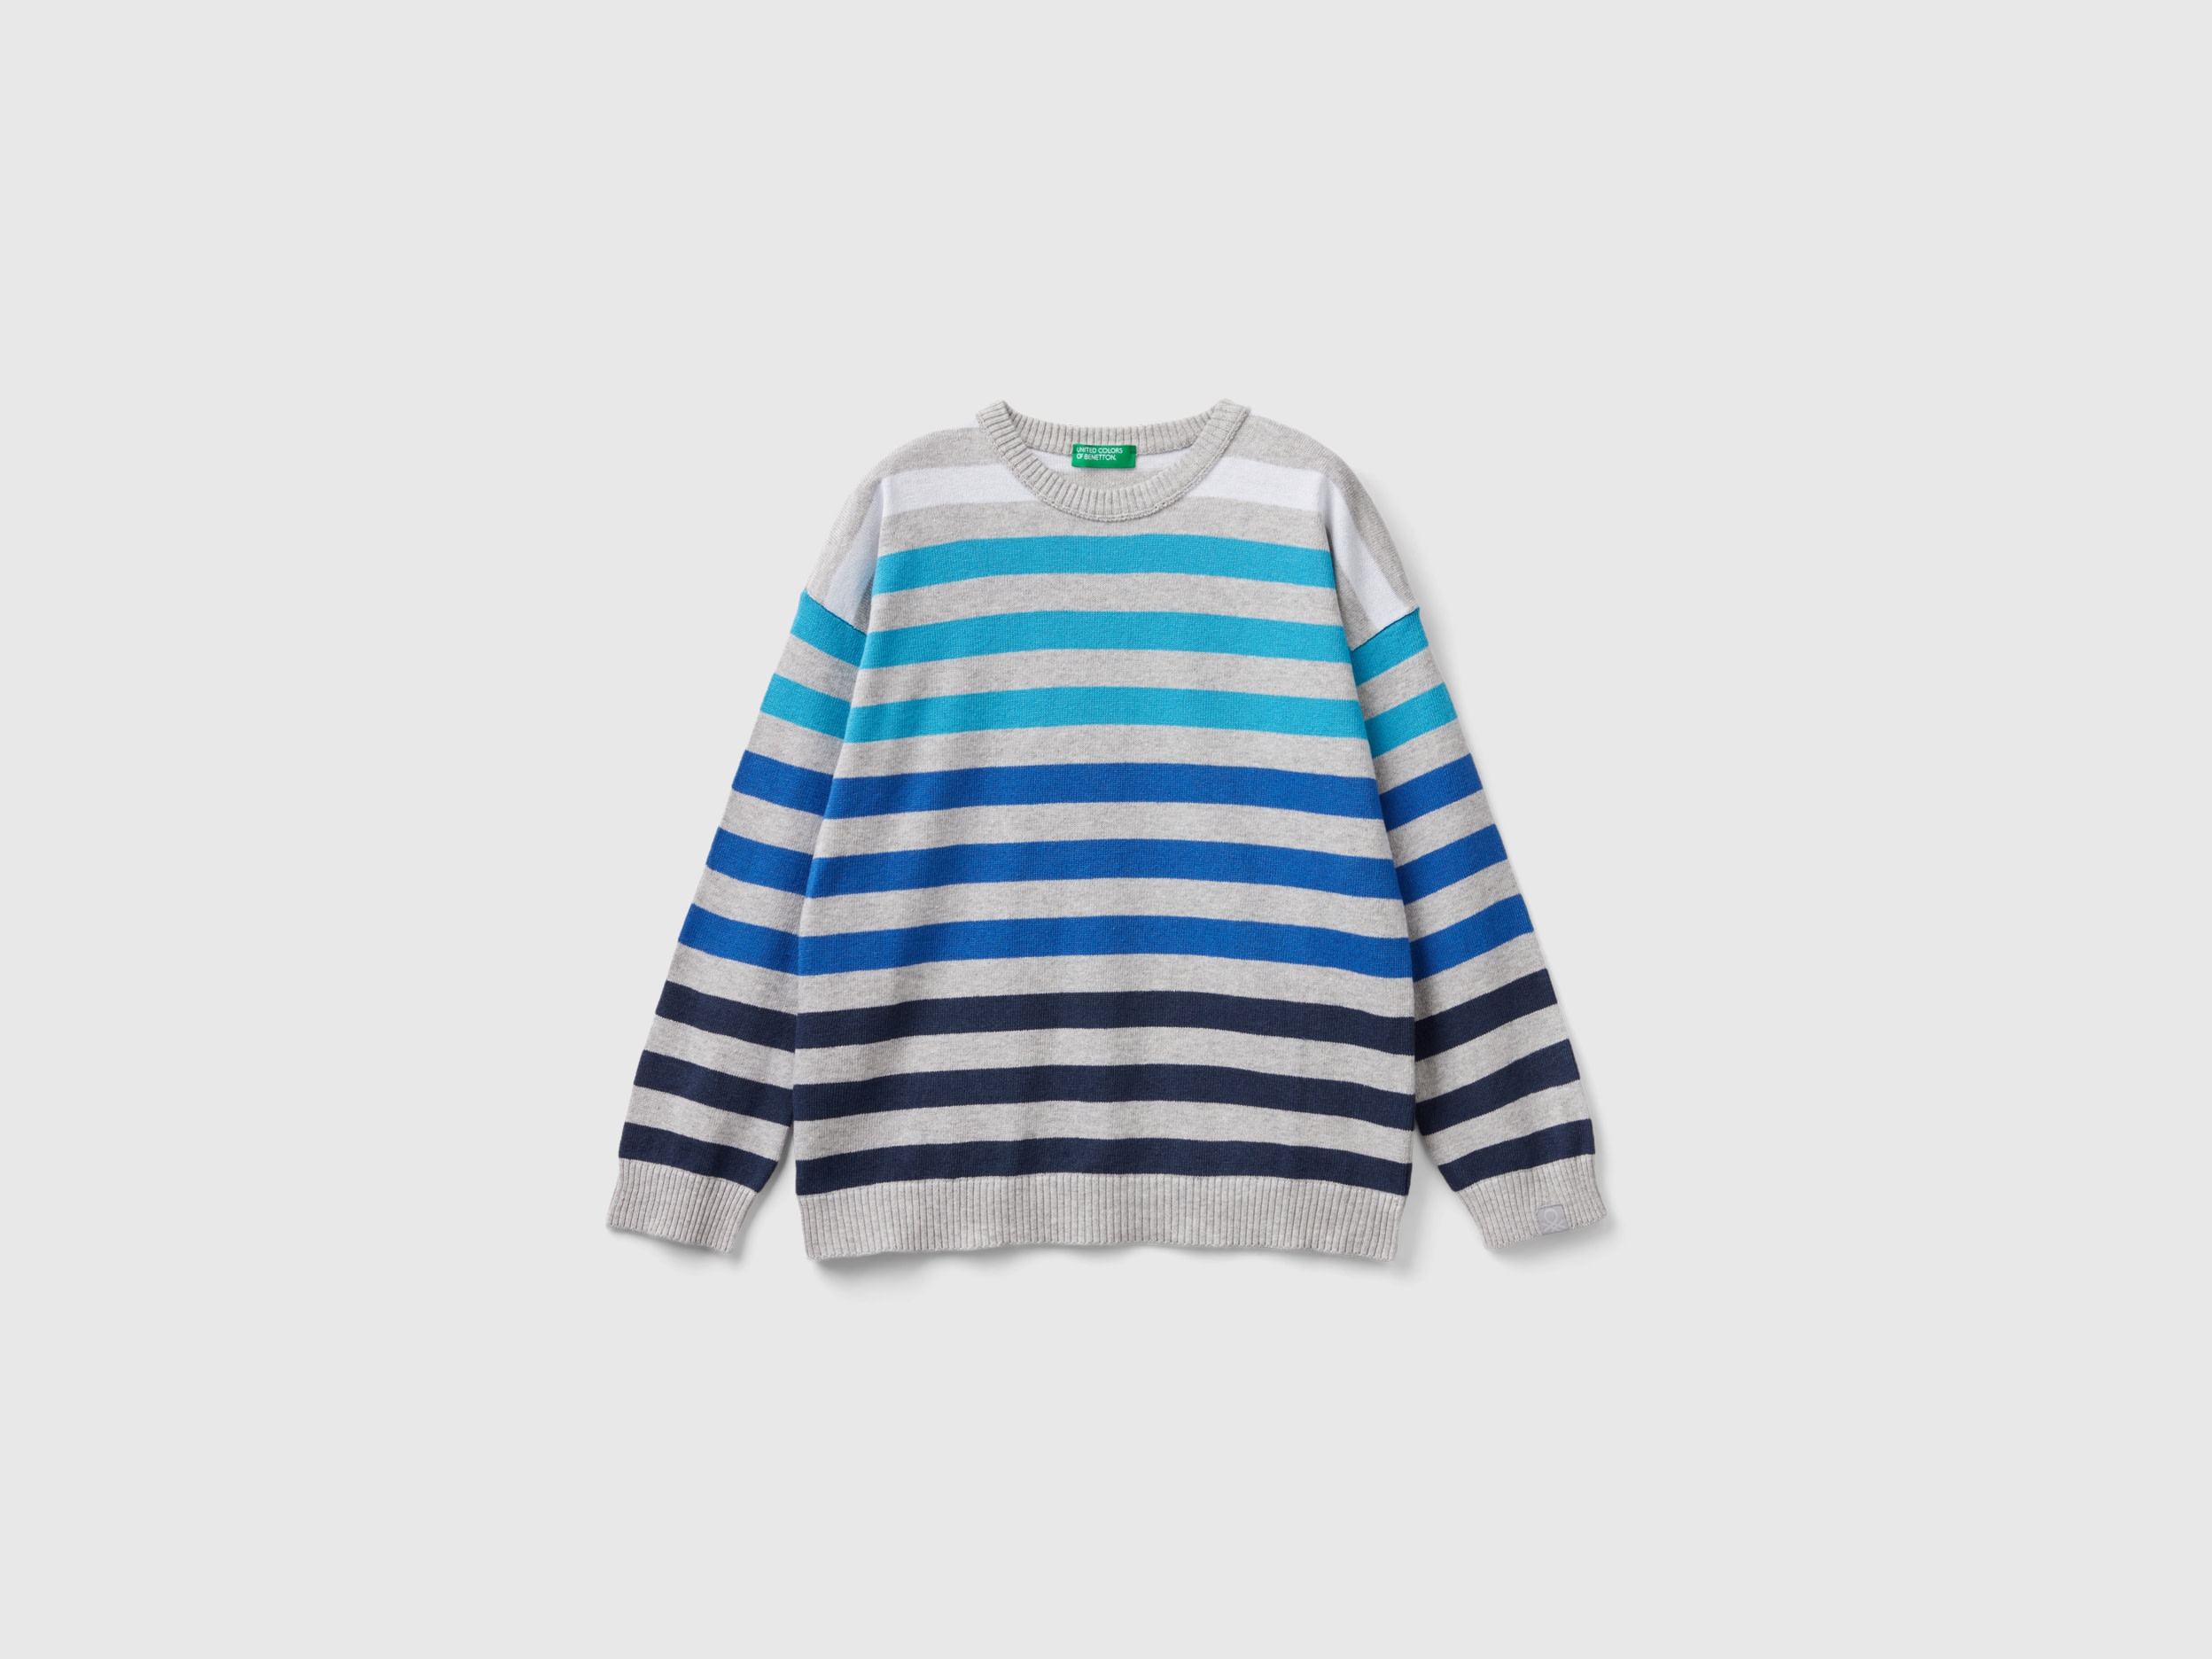 Image of Benetton, Striped Sweater, size L, Light Gray, Kids